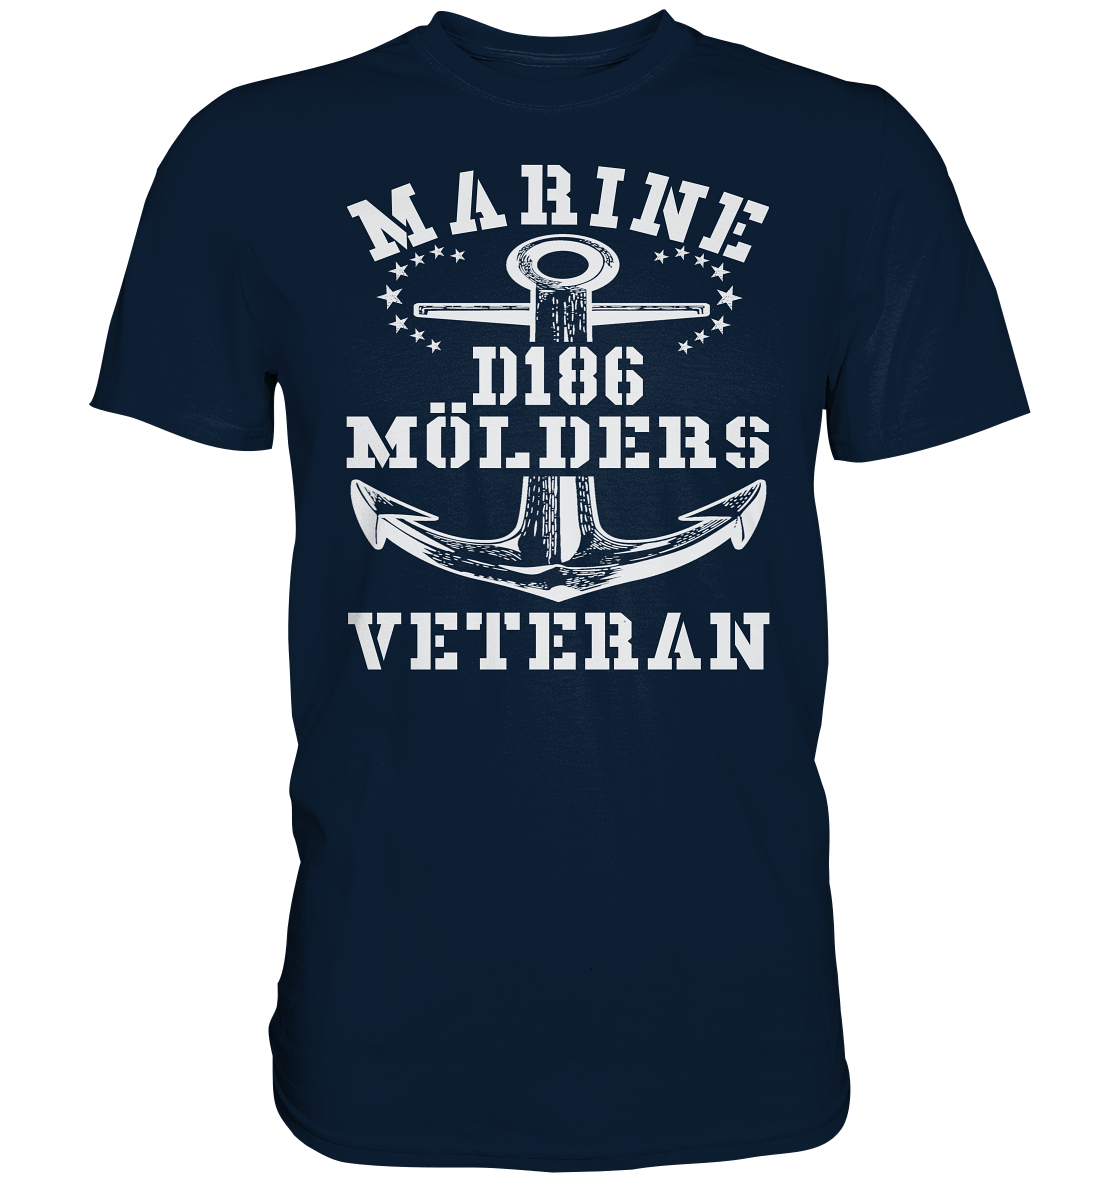 Zerstörer D186 MÖLDERS Marine Veteran - Premium Shirt